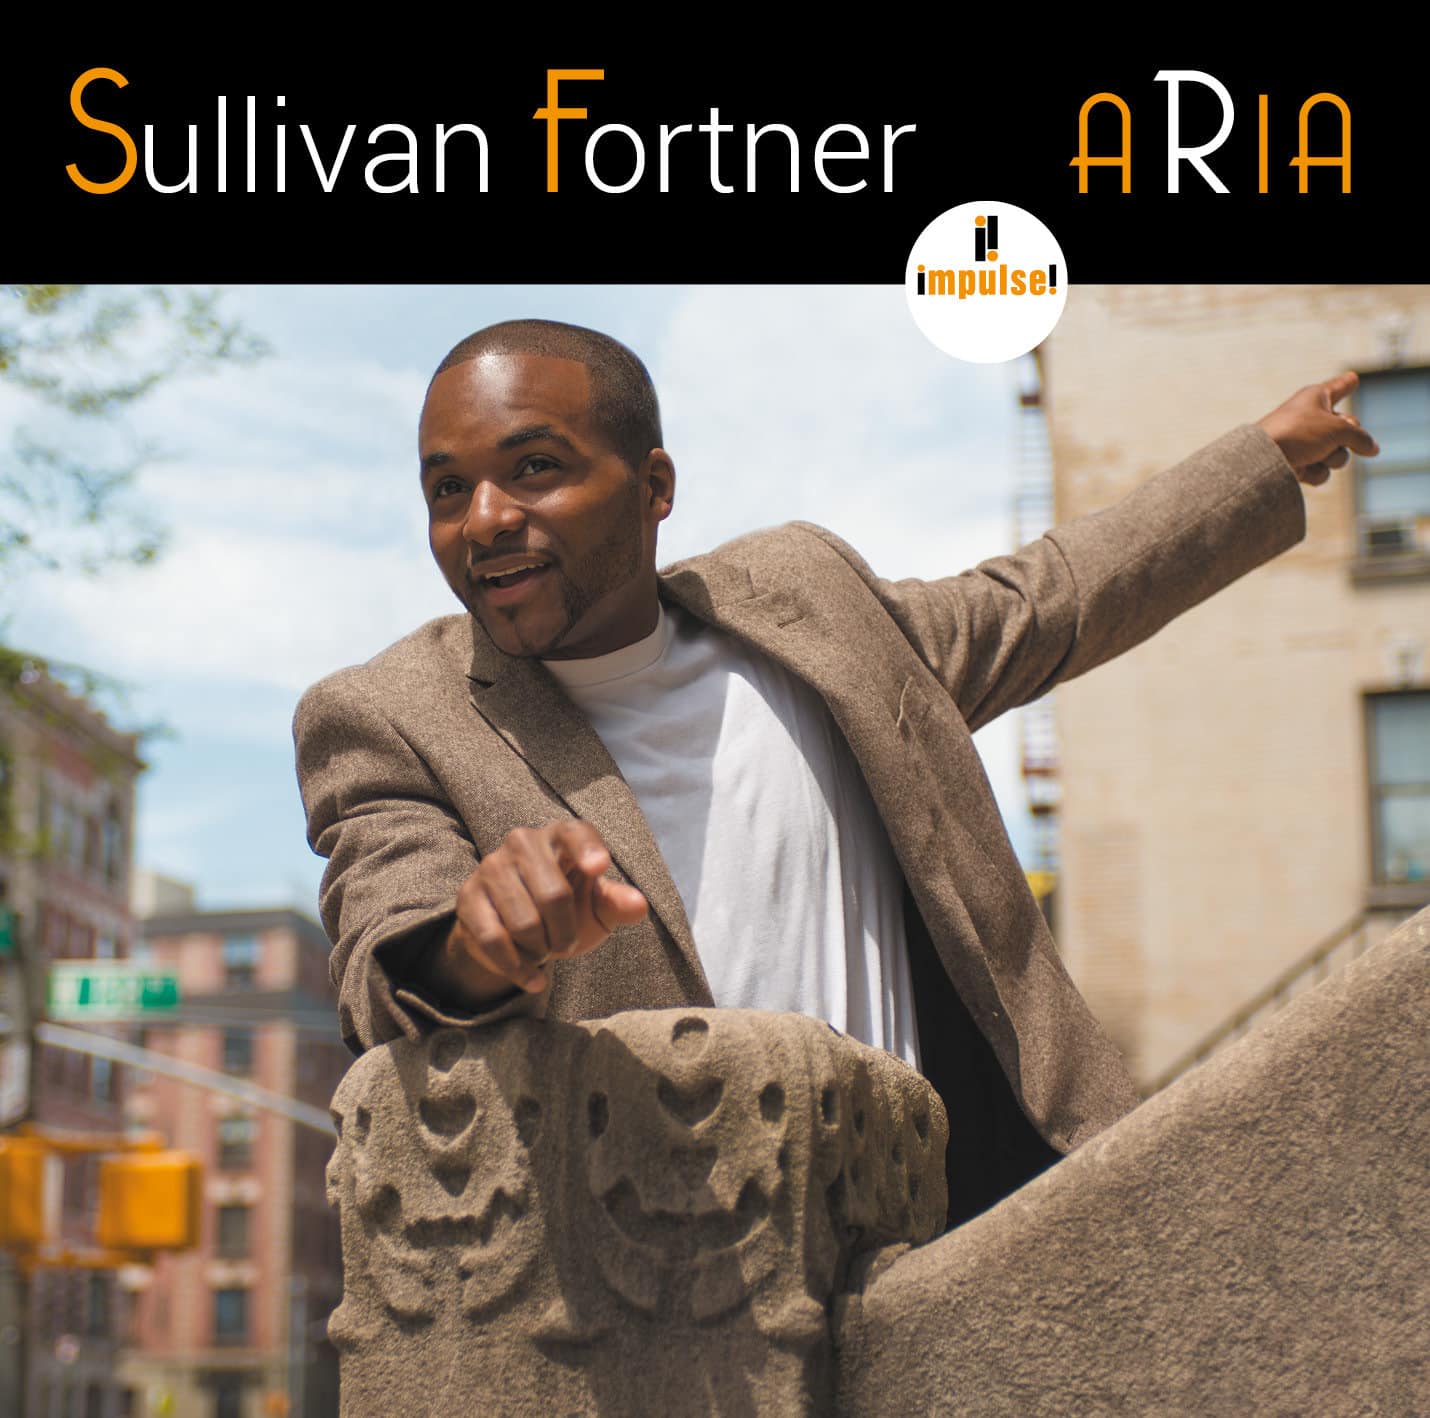 SullivanFortner_Aria_Cover